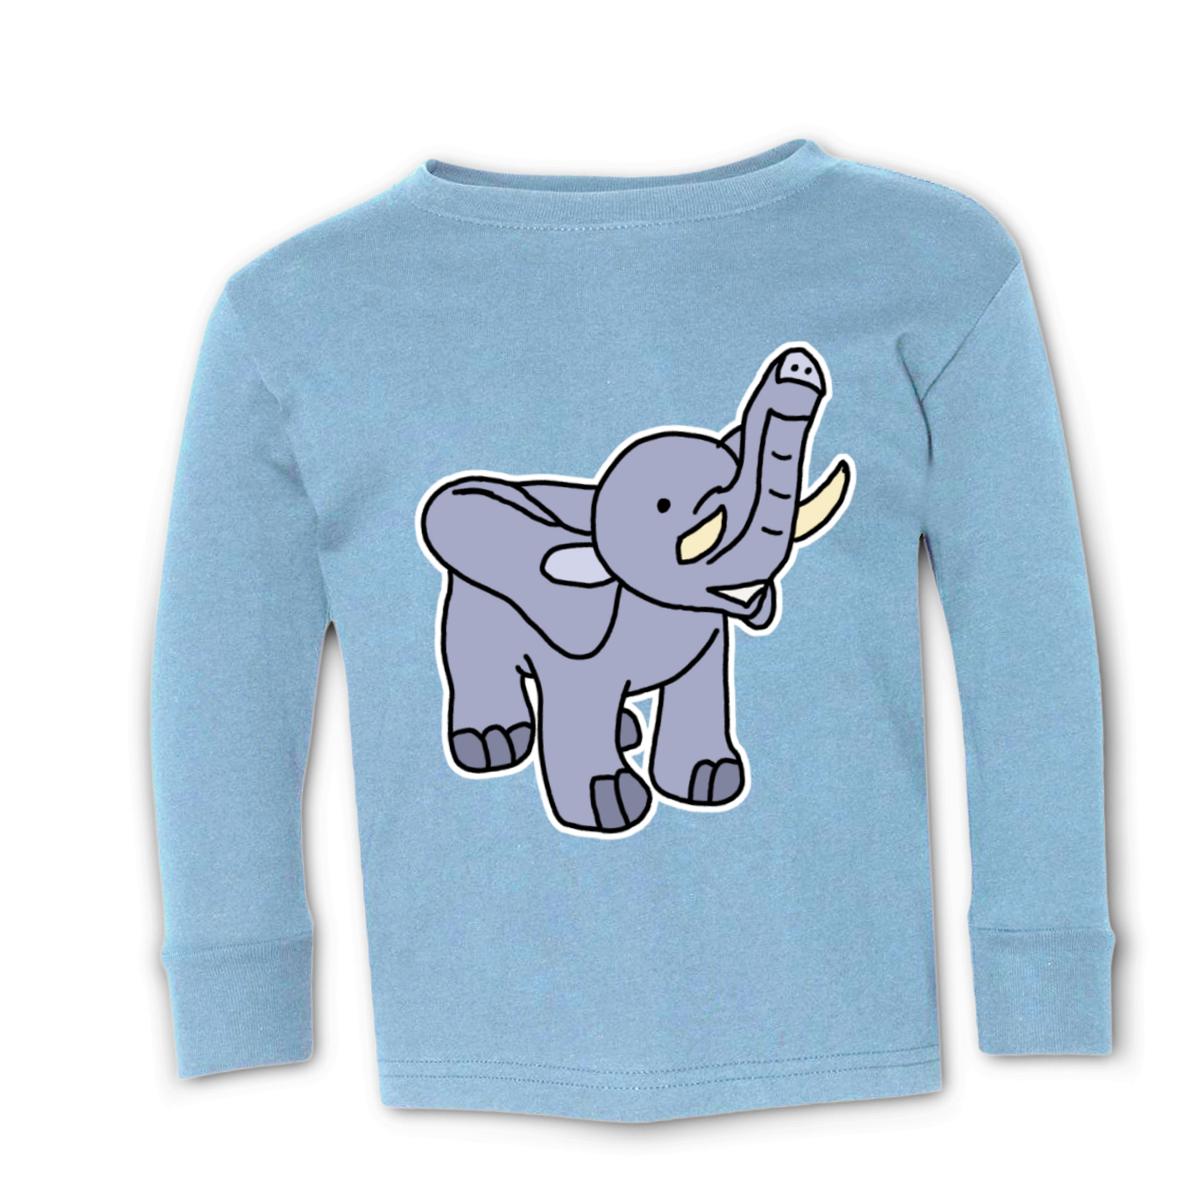 Toy Elephant Kid's Long Sleeve Tee Small light-blue